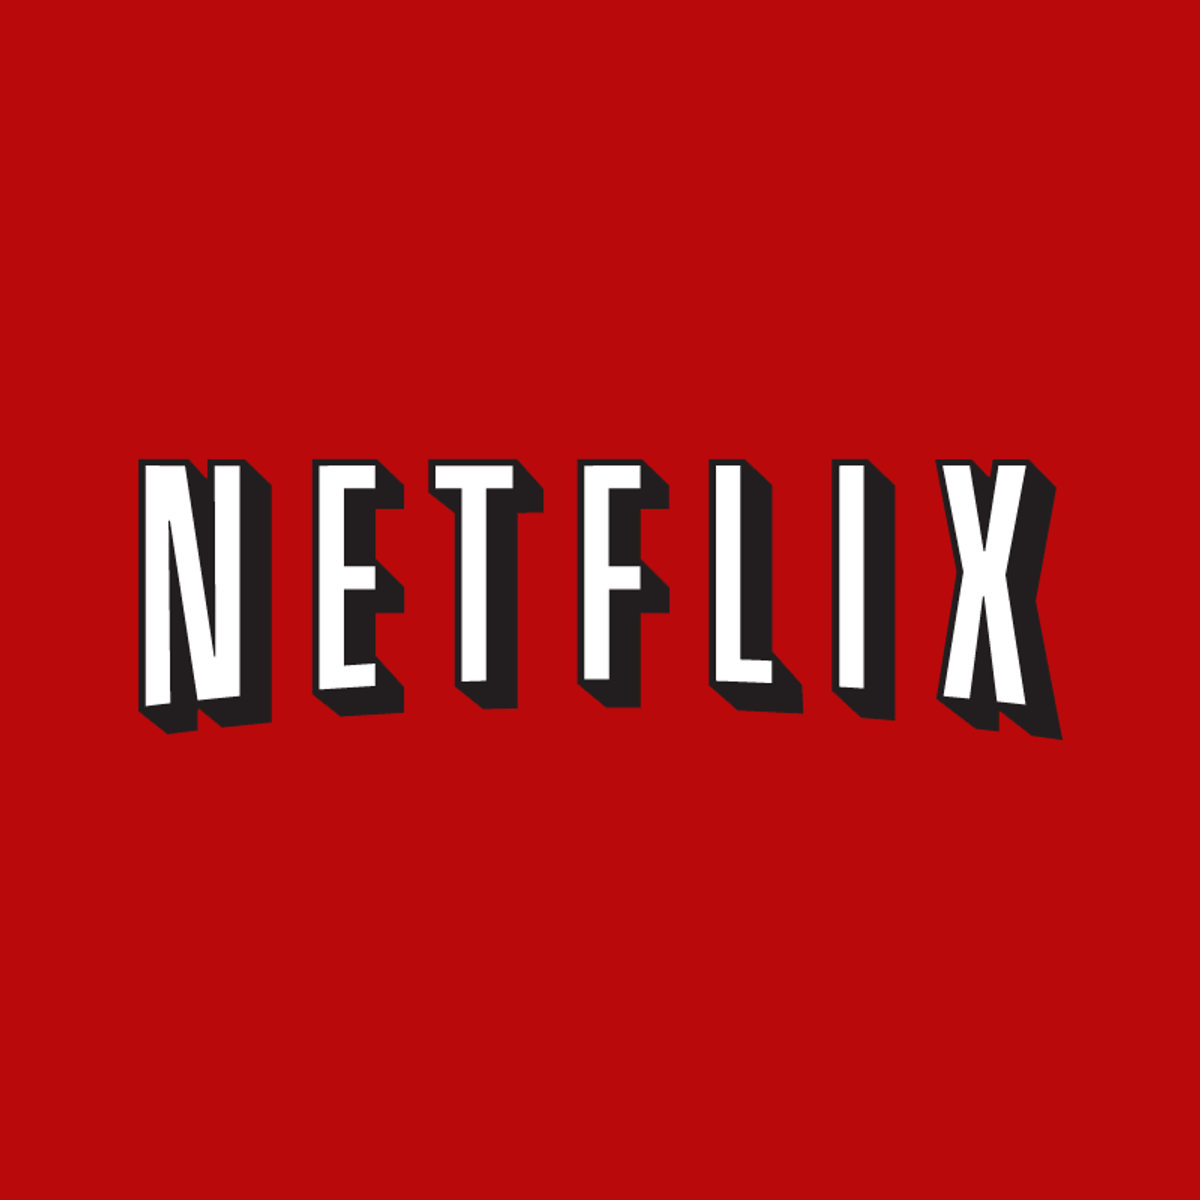 10 Netflix Shows That You Should Watch